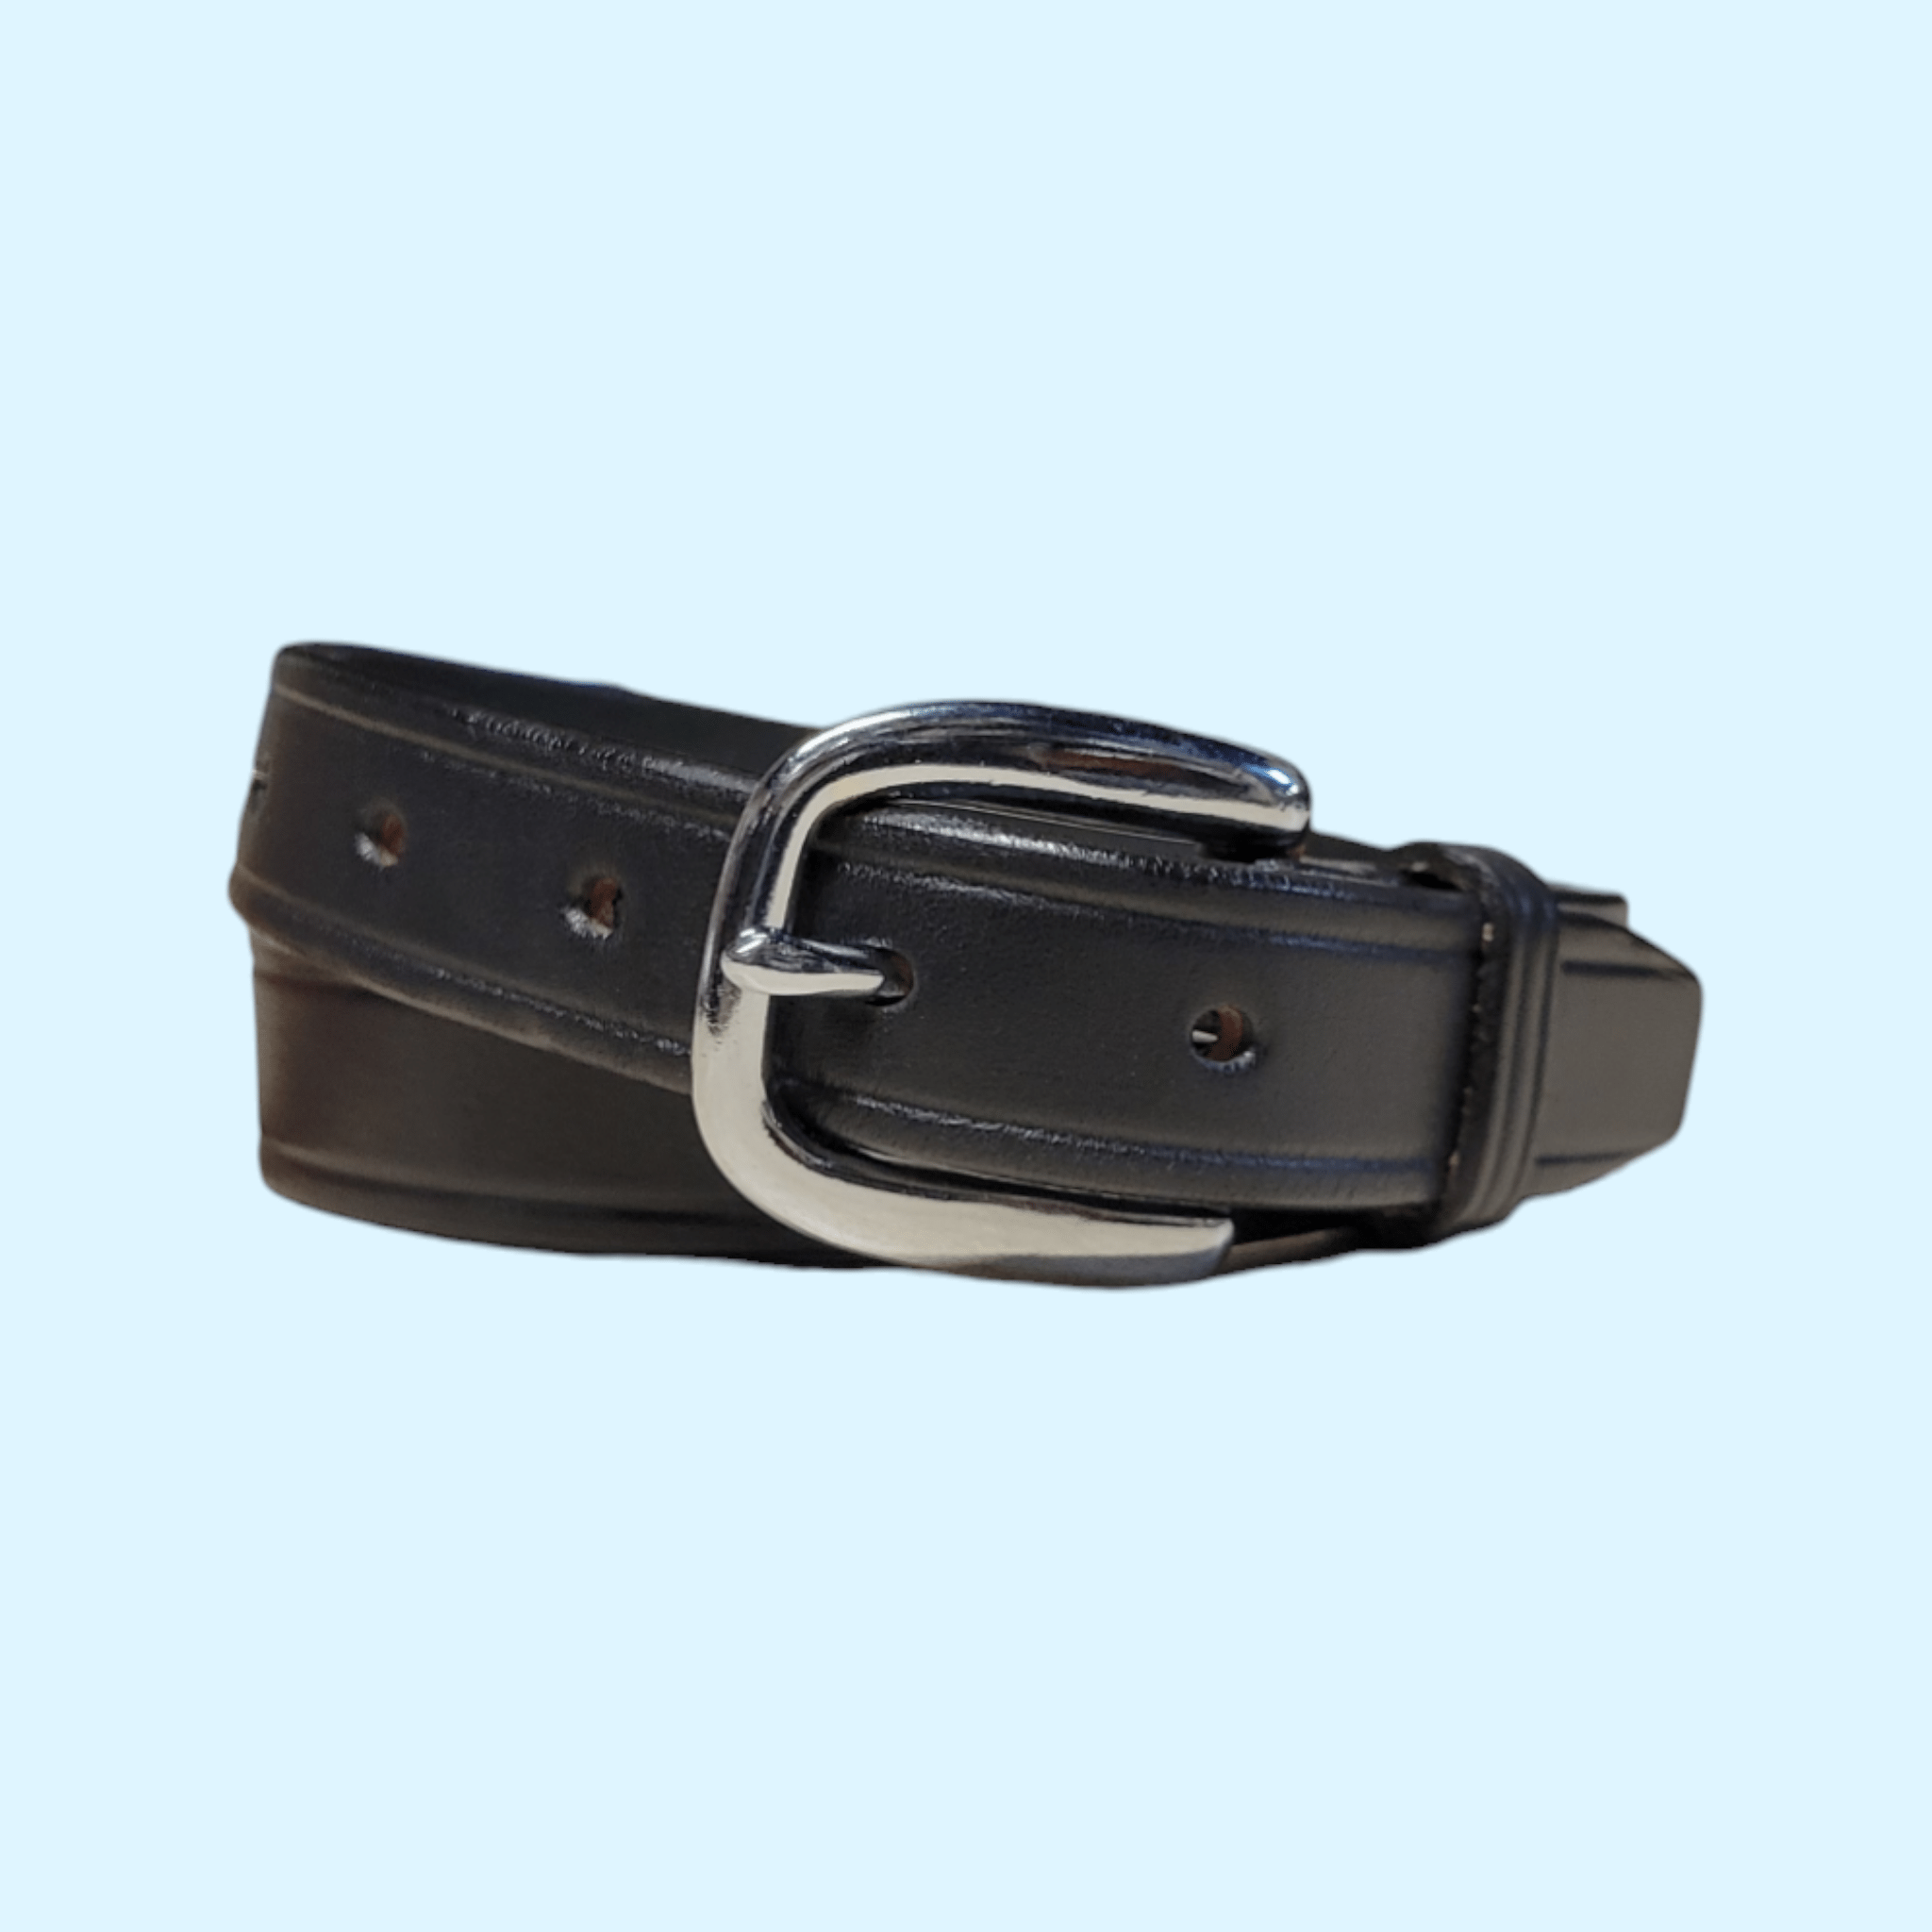 Tory Leather 1" Snaffle Bit Belt in Black - 28" NWOT